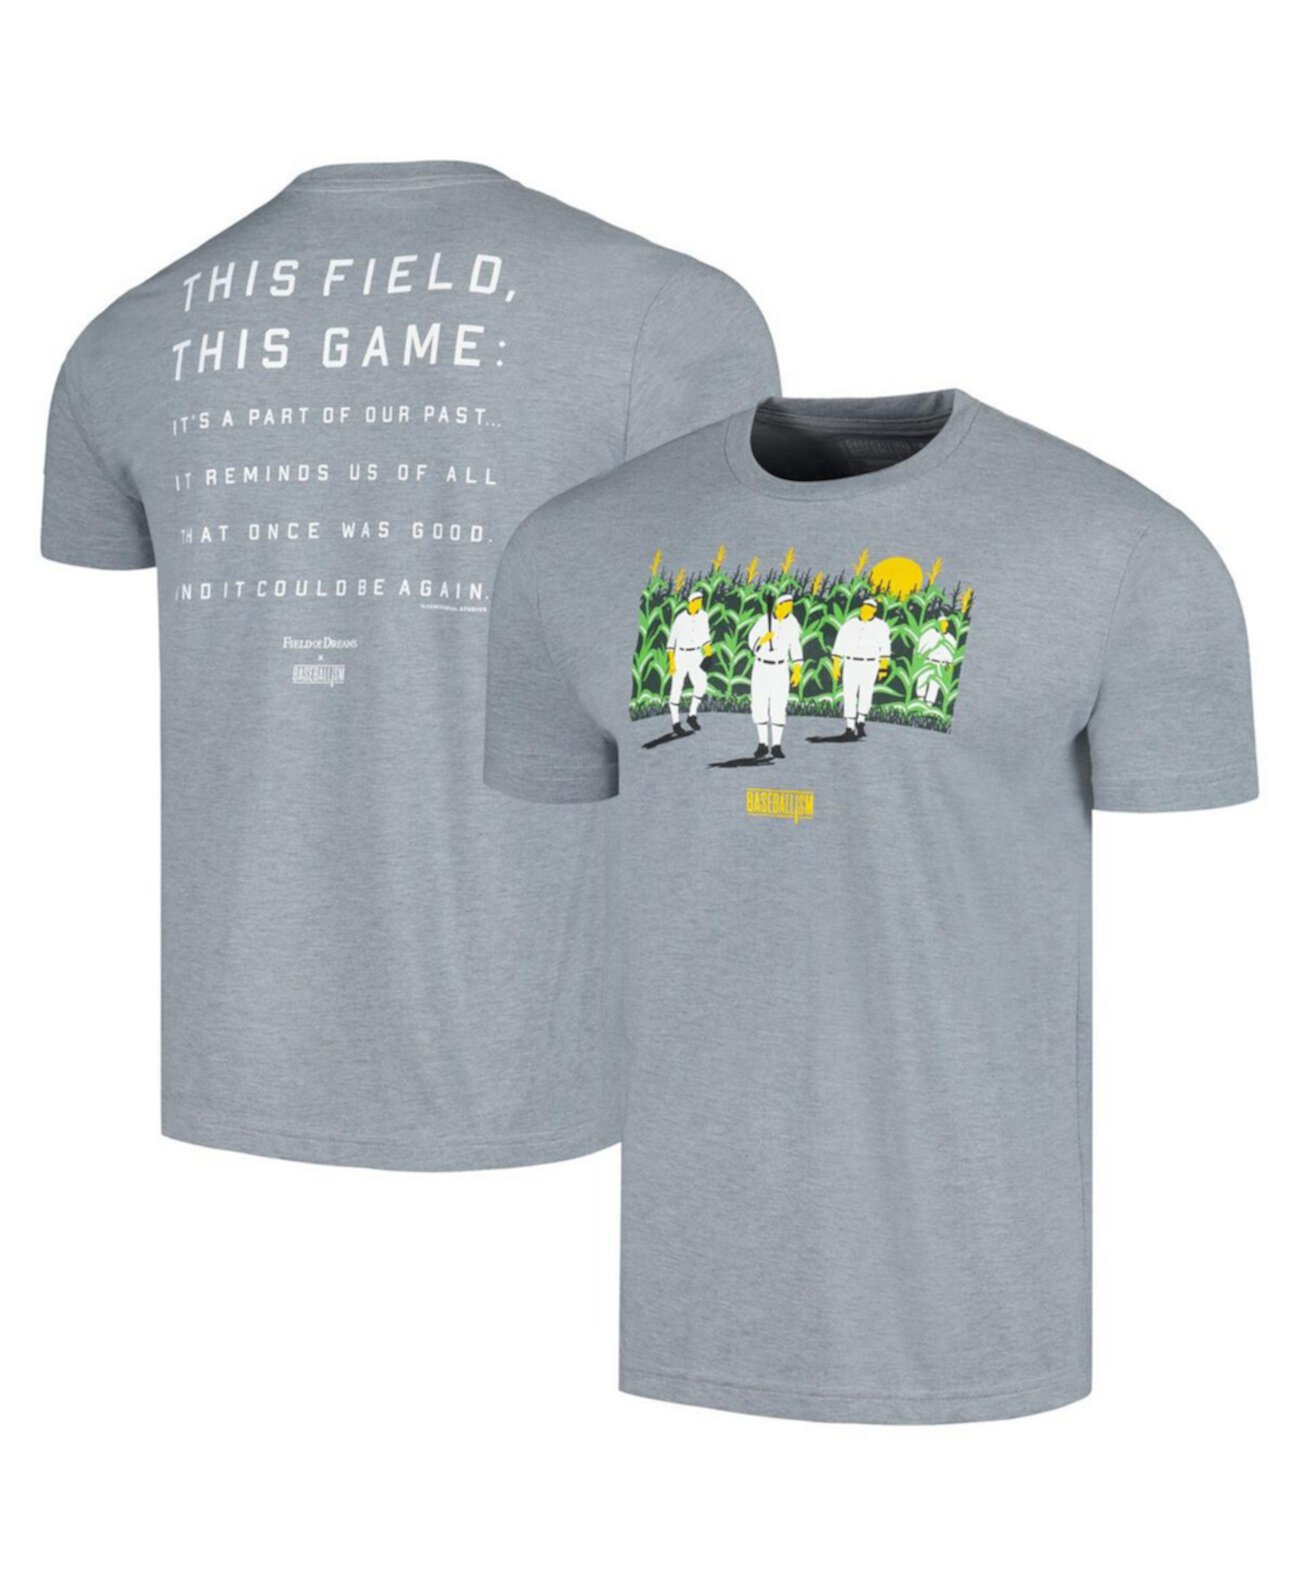 Men's and Women's Heather Gray Field of Dreams This Field T-Shirt Baseballism